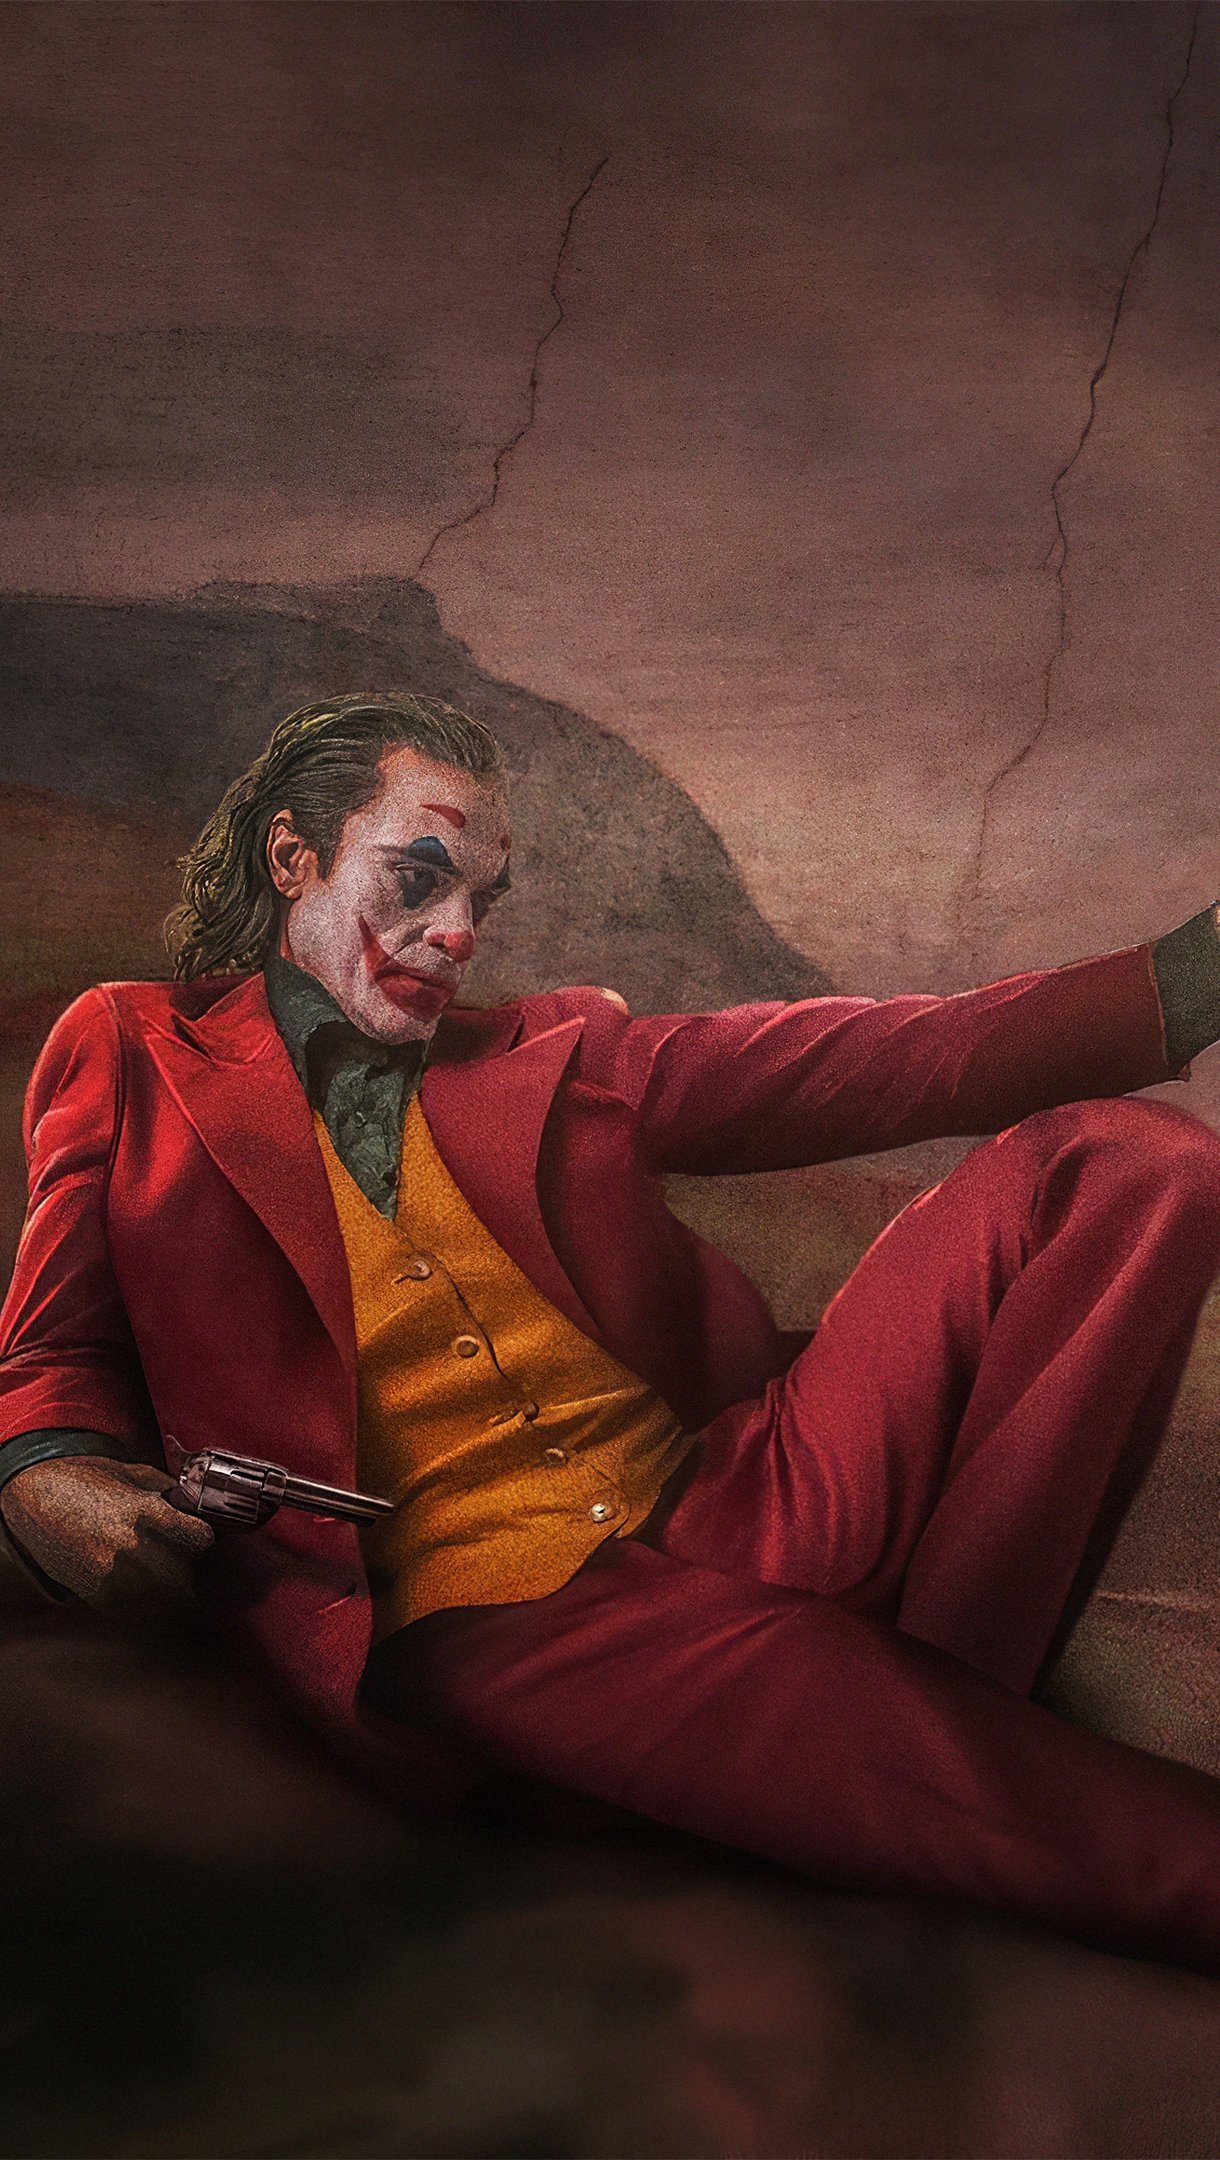 Wallpaper Joker as Joaquin Phoenix and Heath Ledger in Michelangelo painting Vertical